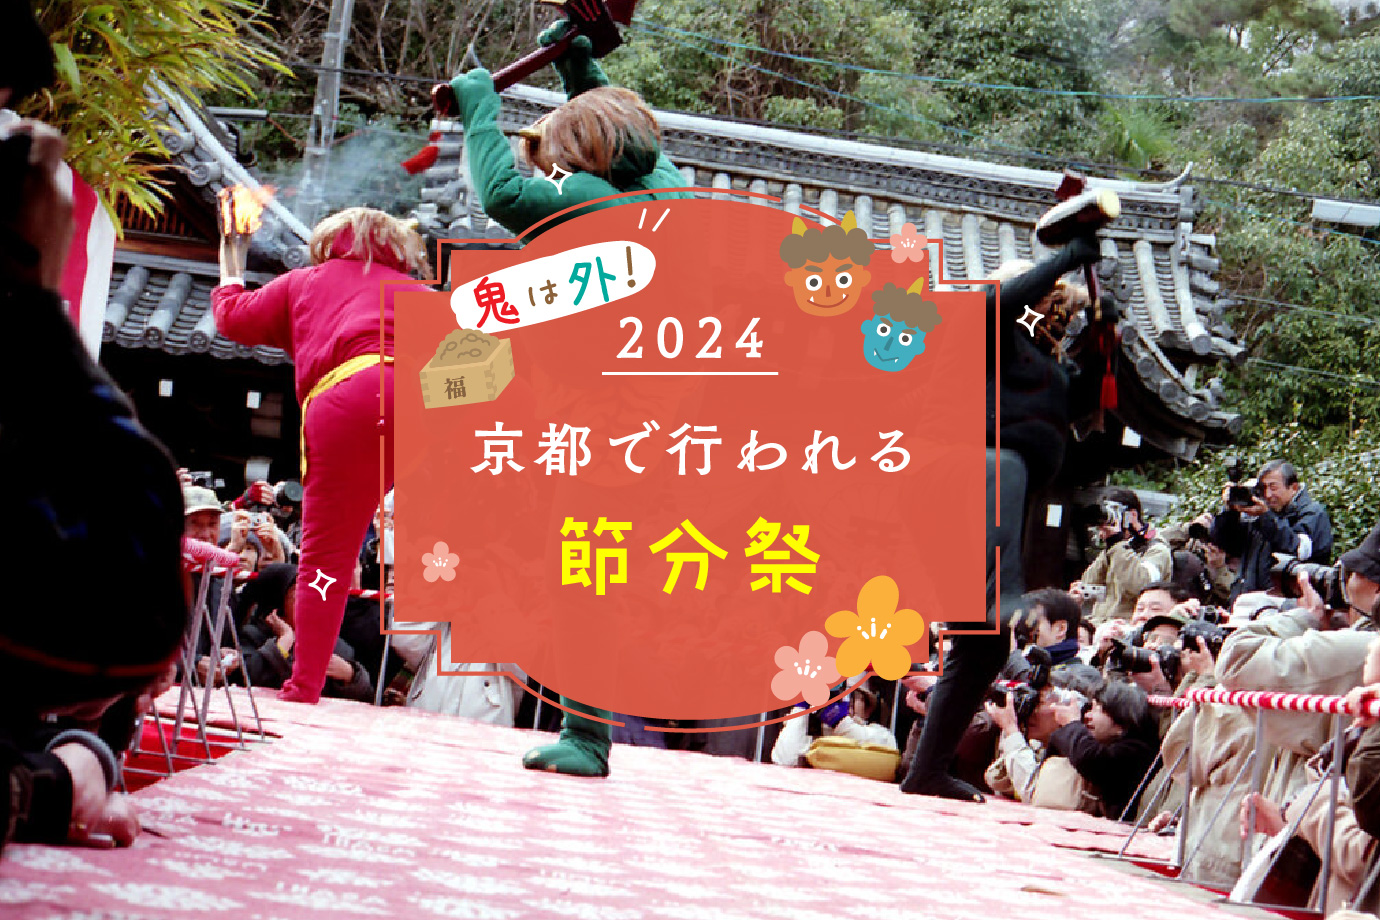 Setsubun 2025 in Japan - Dates